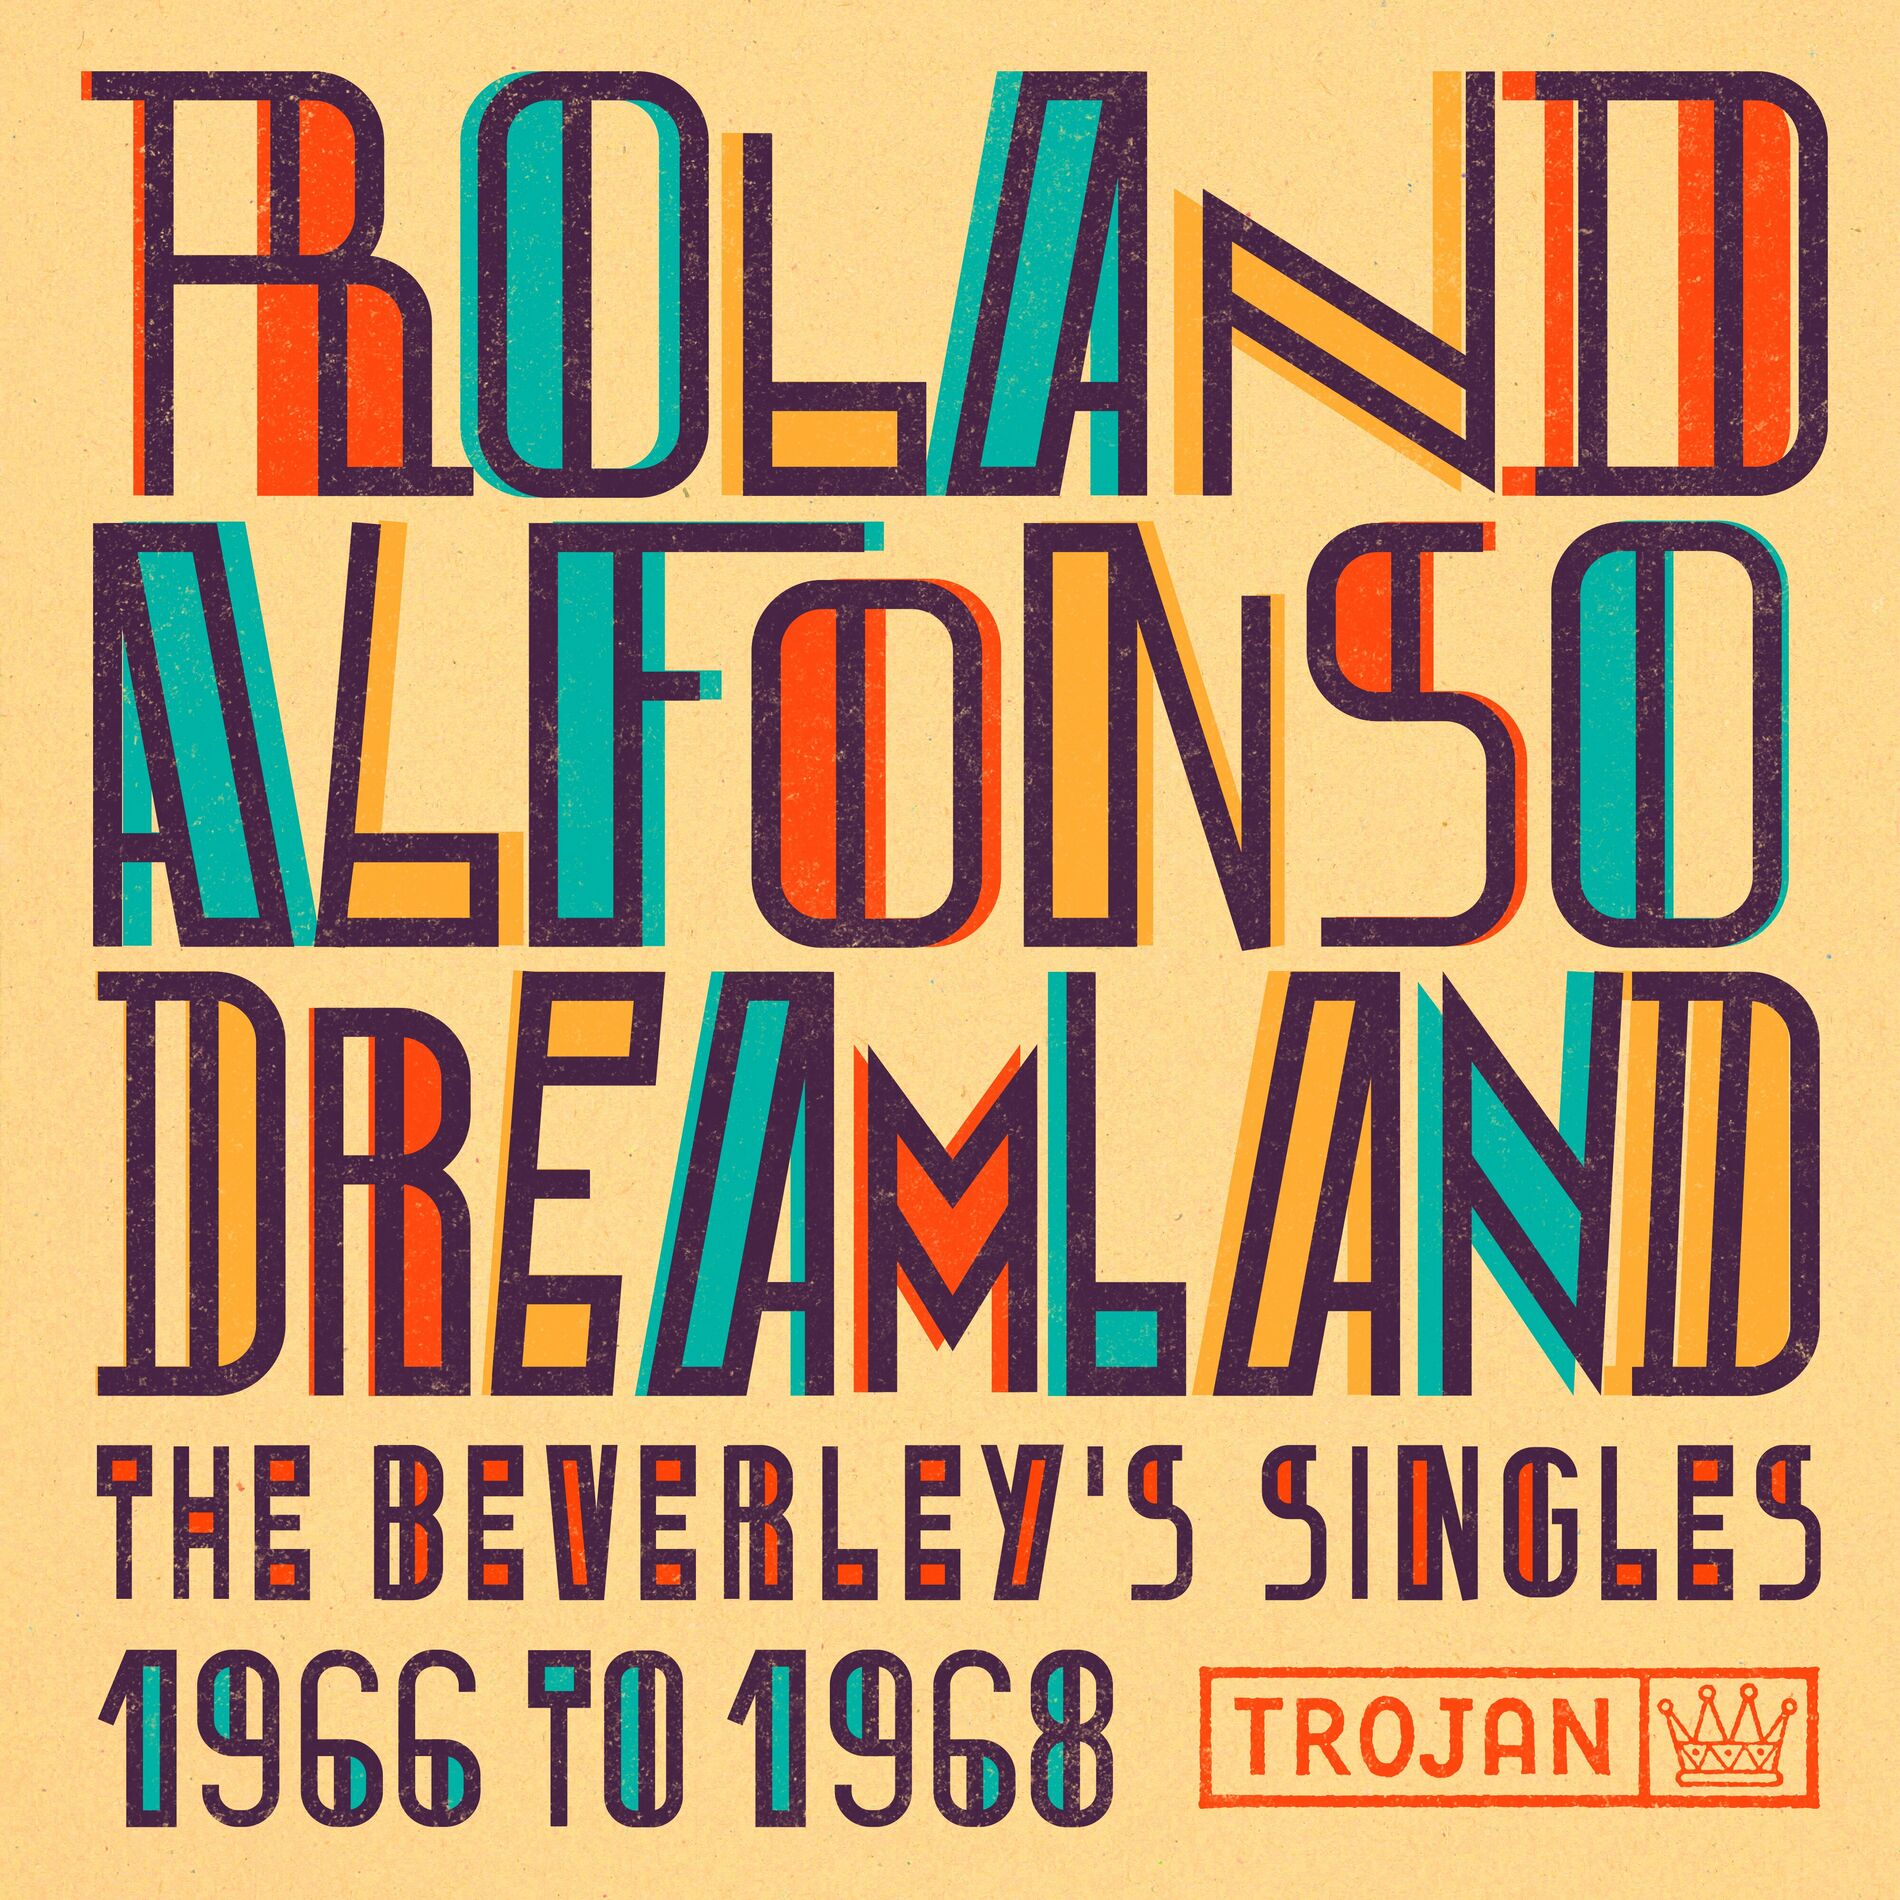 Roland Alphonso: albums, songs, playlists | Listen on Deezer